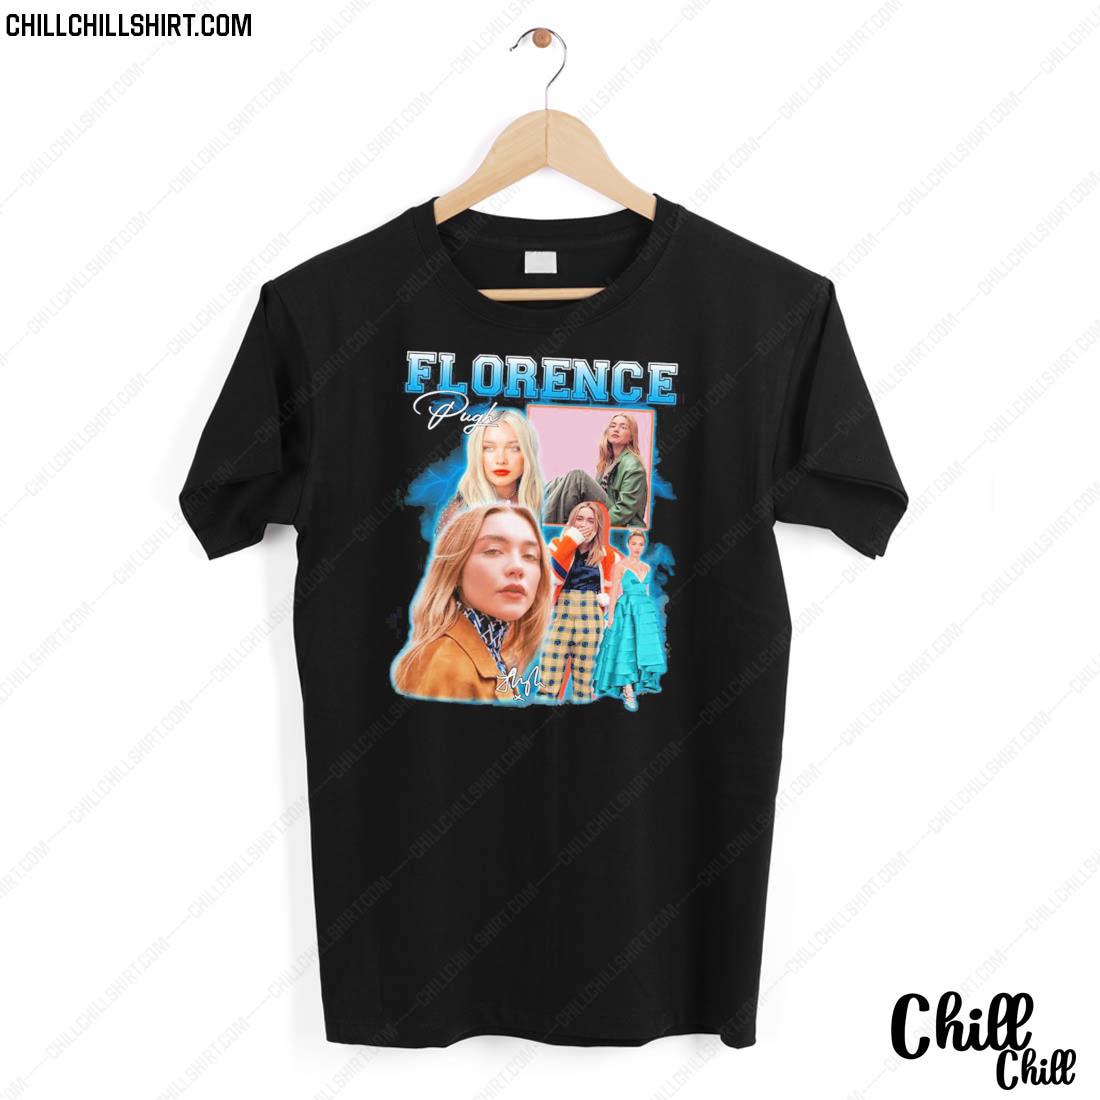 Official vintage Florence Pugh Shirt